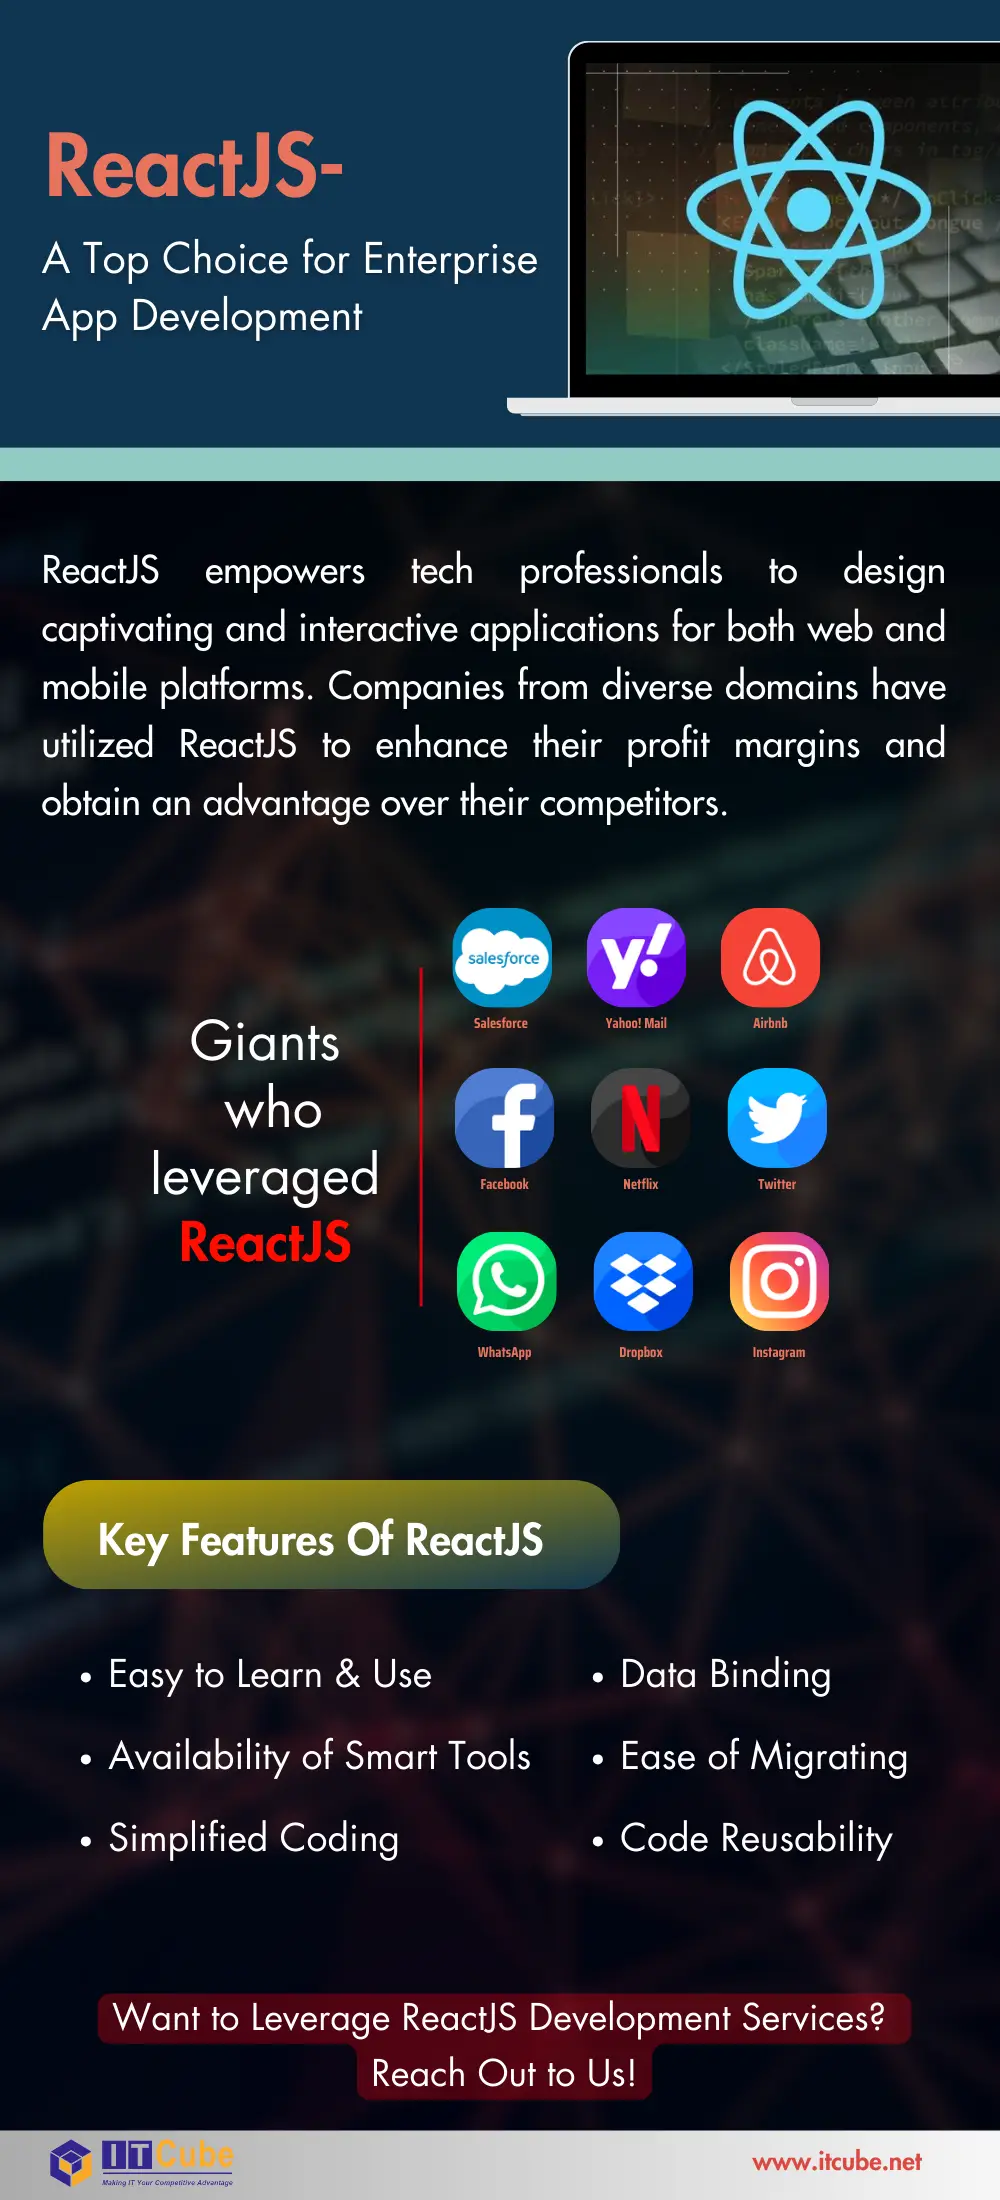 reactjs-a-top-choice-for-enterprise-app-development Image